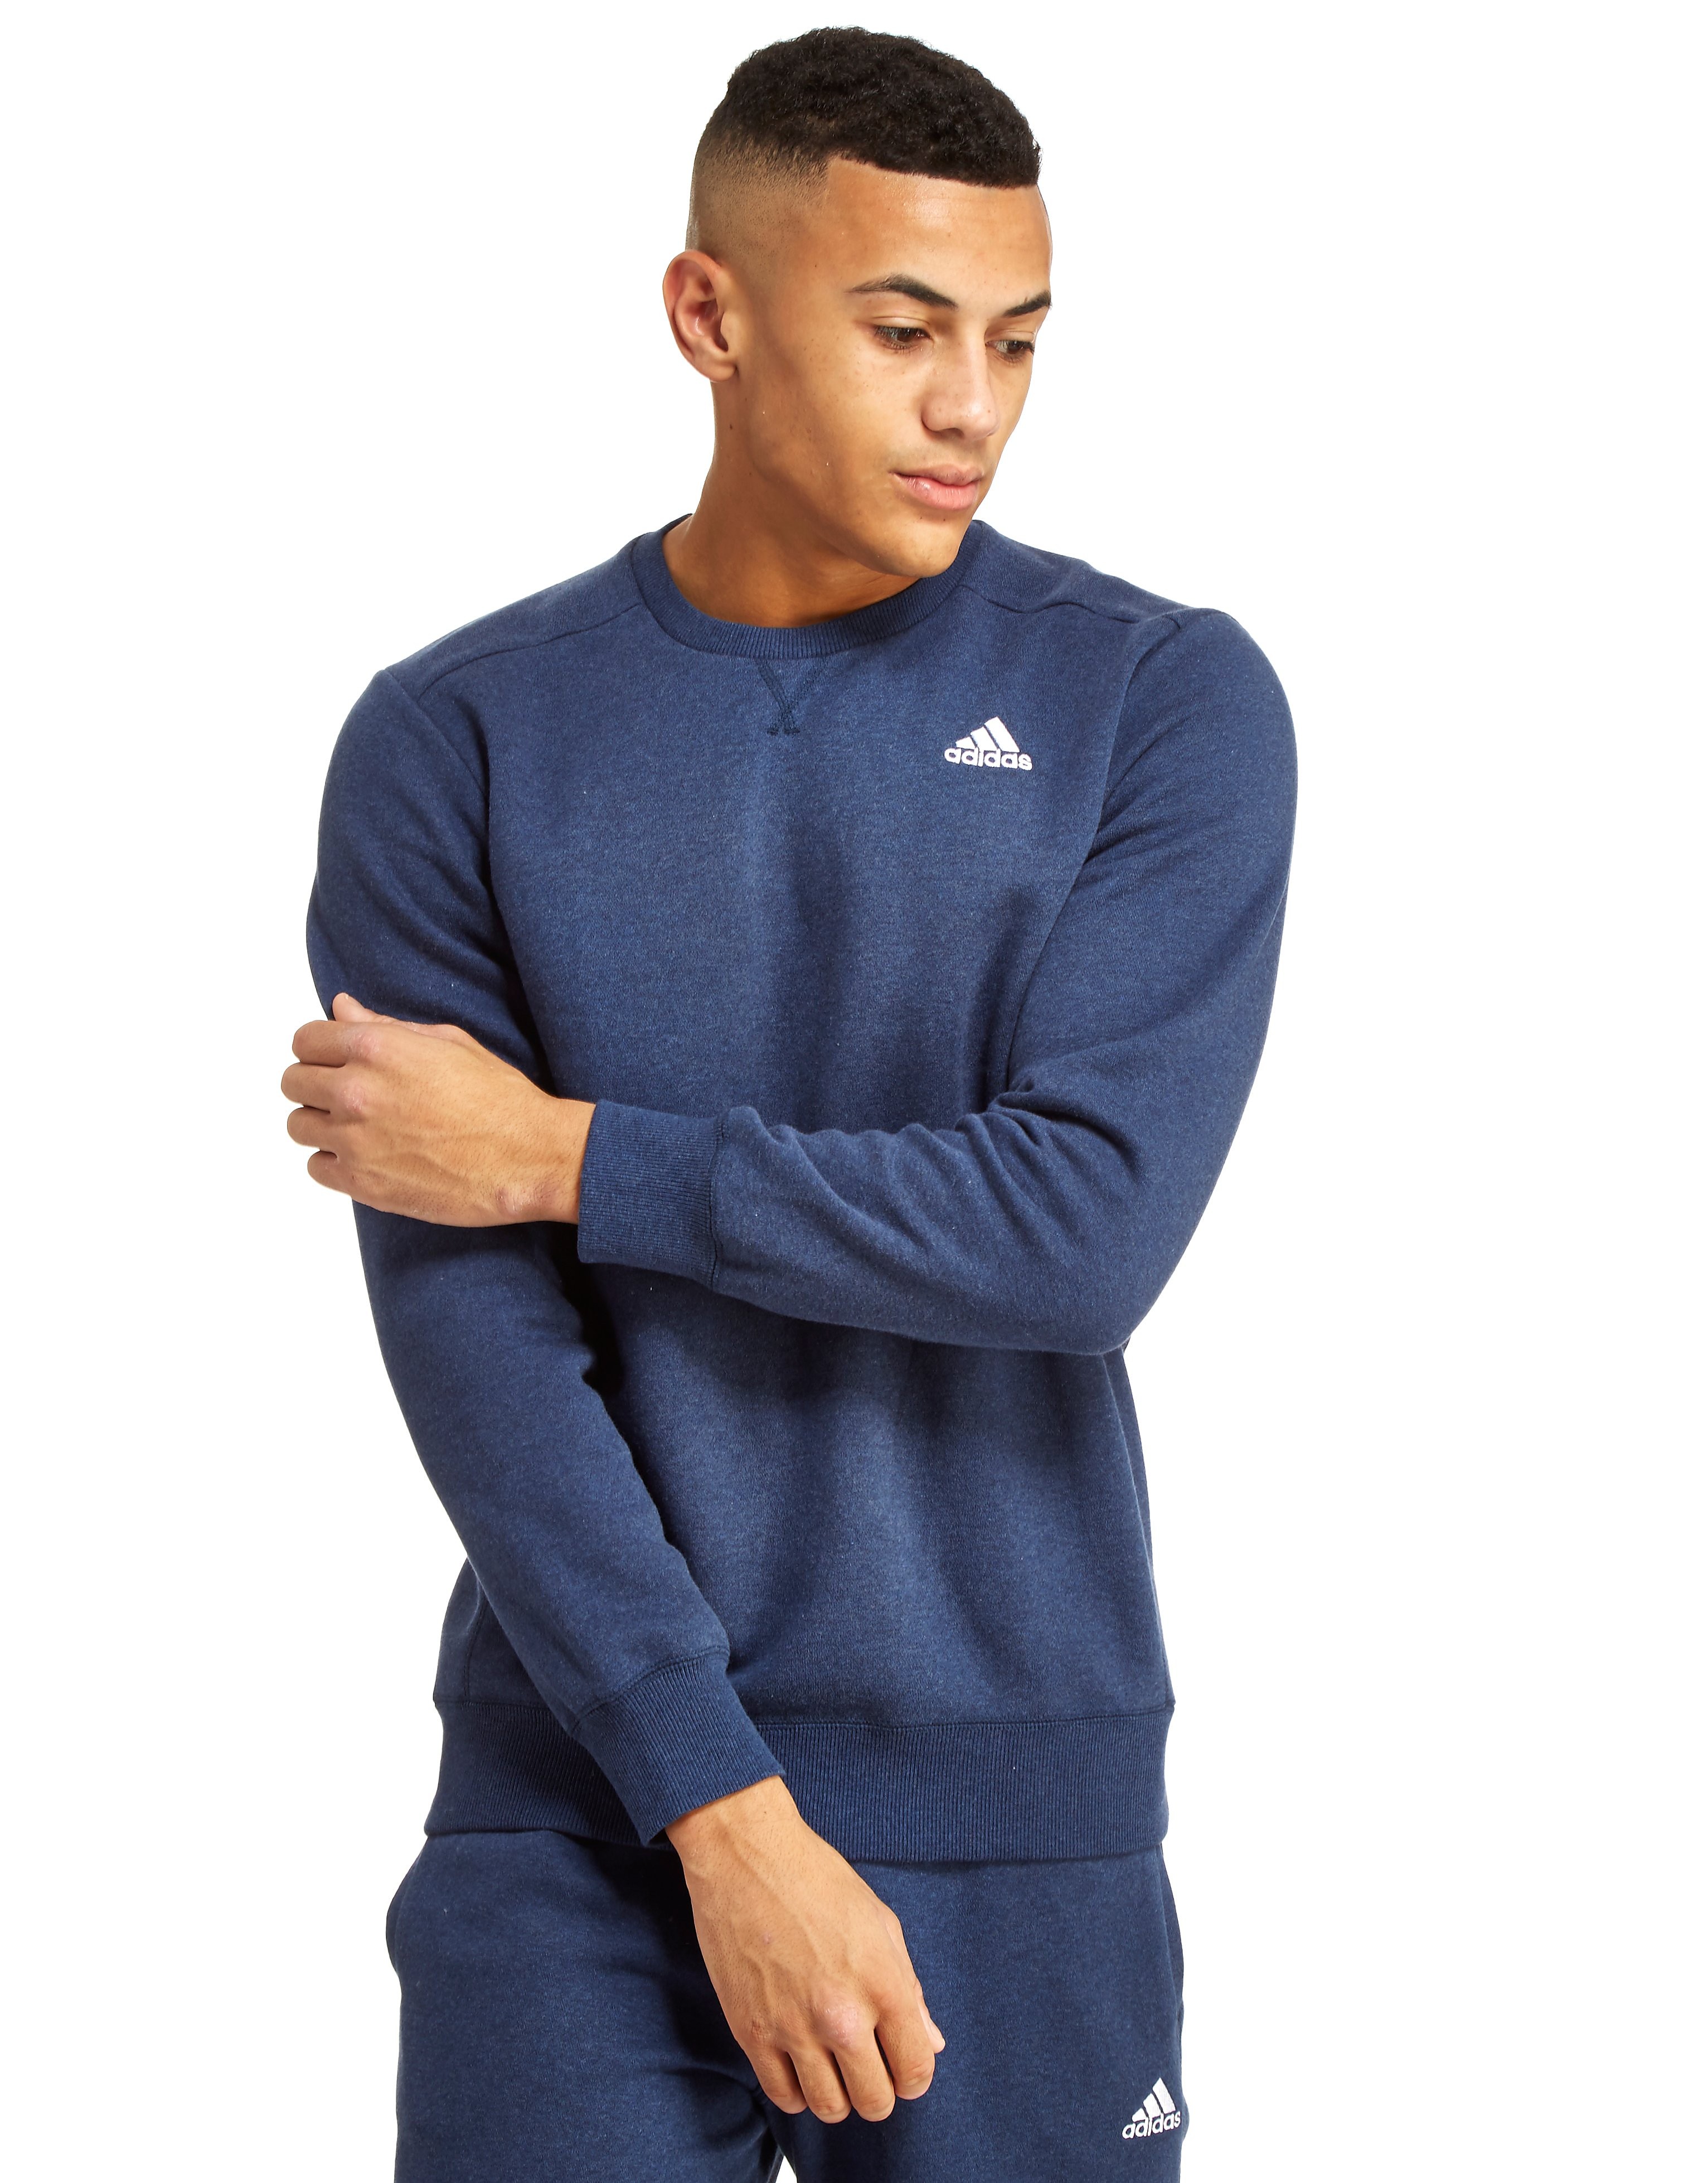 adidas Essential Crew Sweatshirt - Navy - Mens - Sports King Store